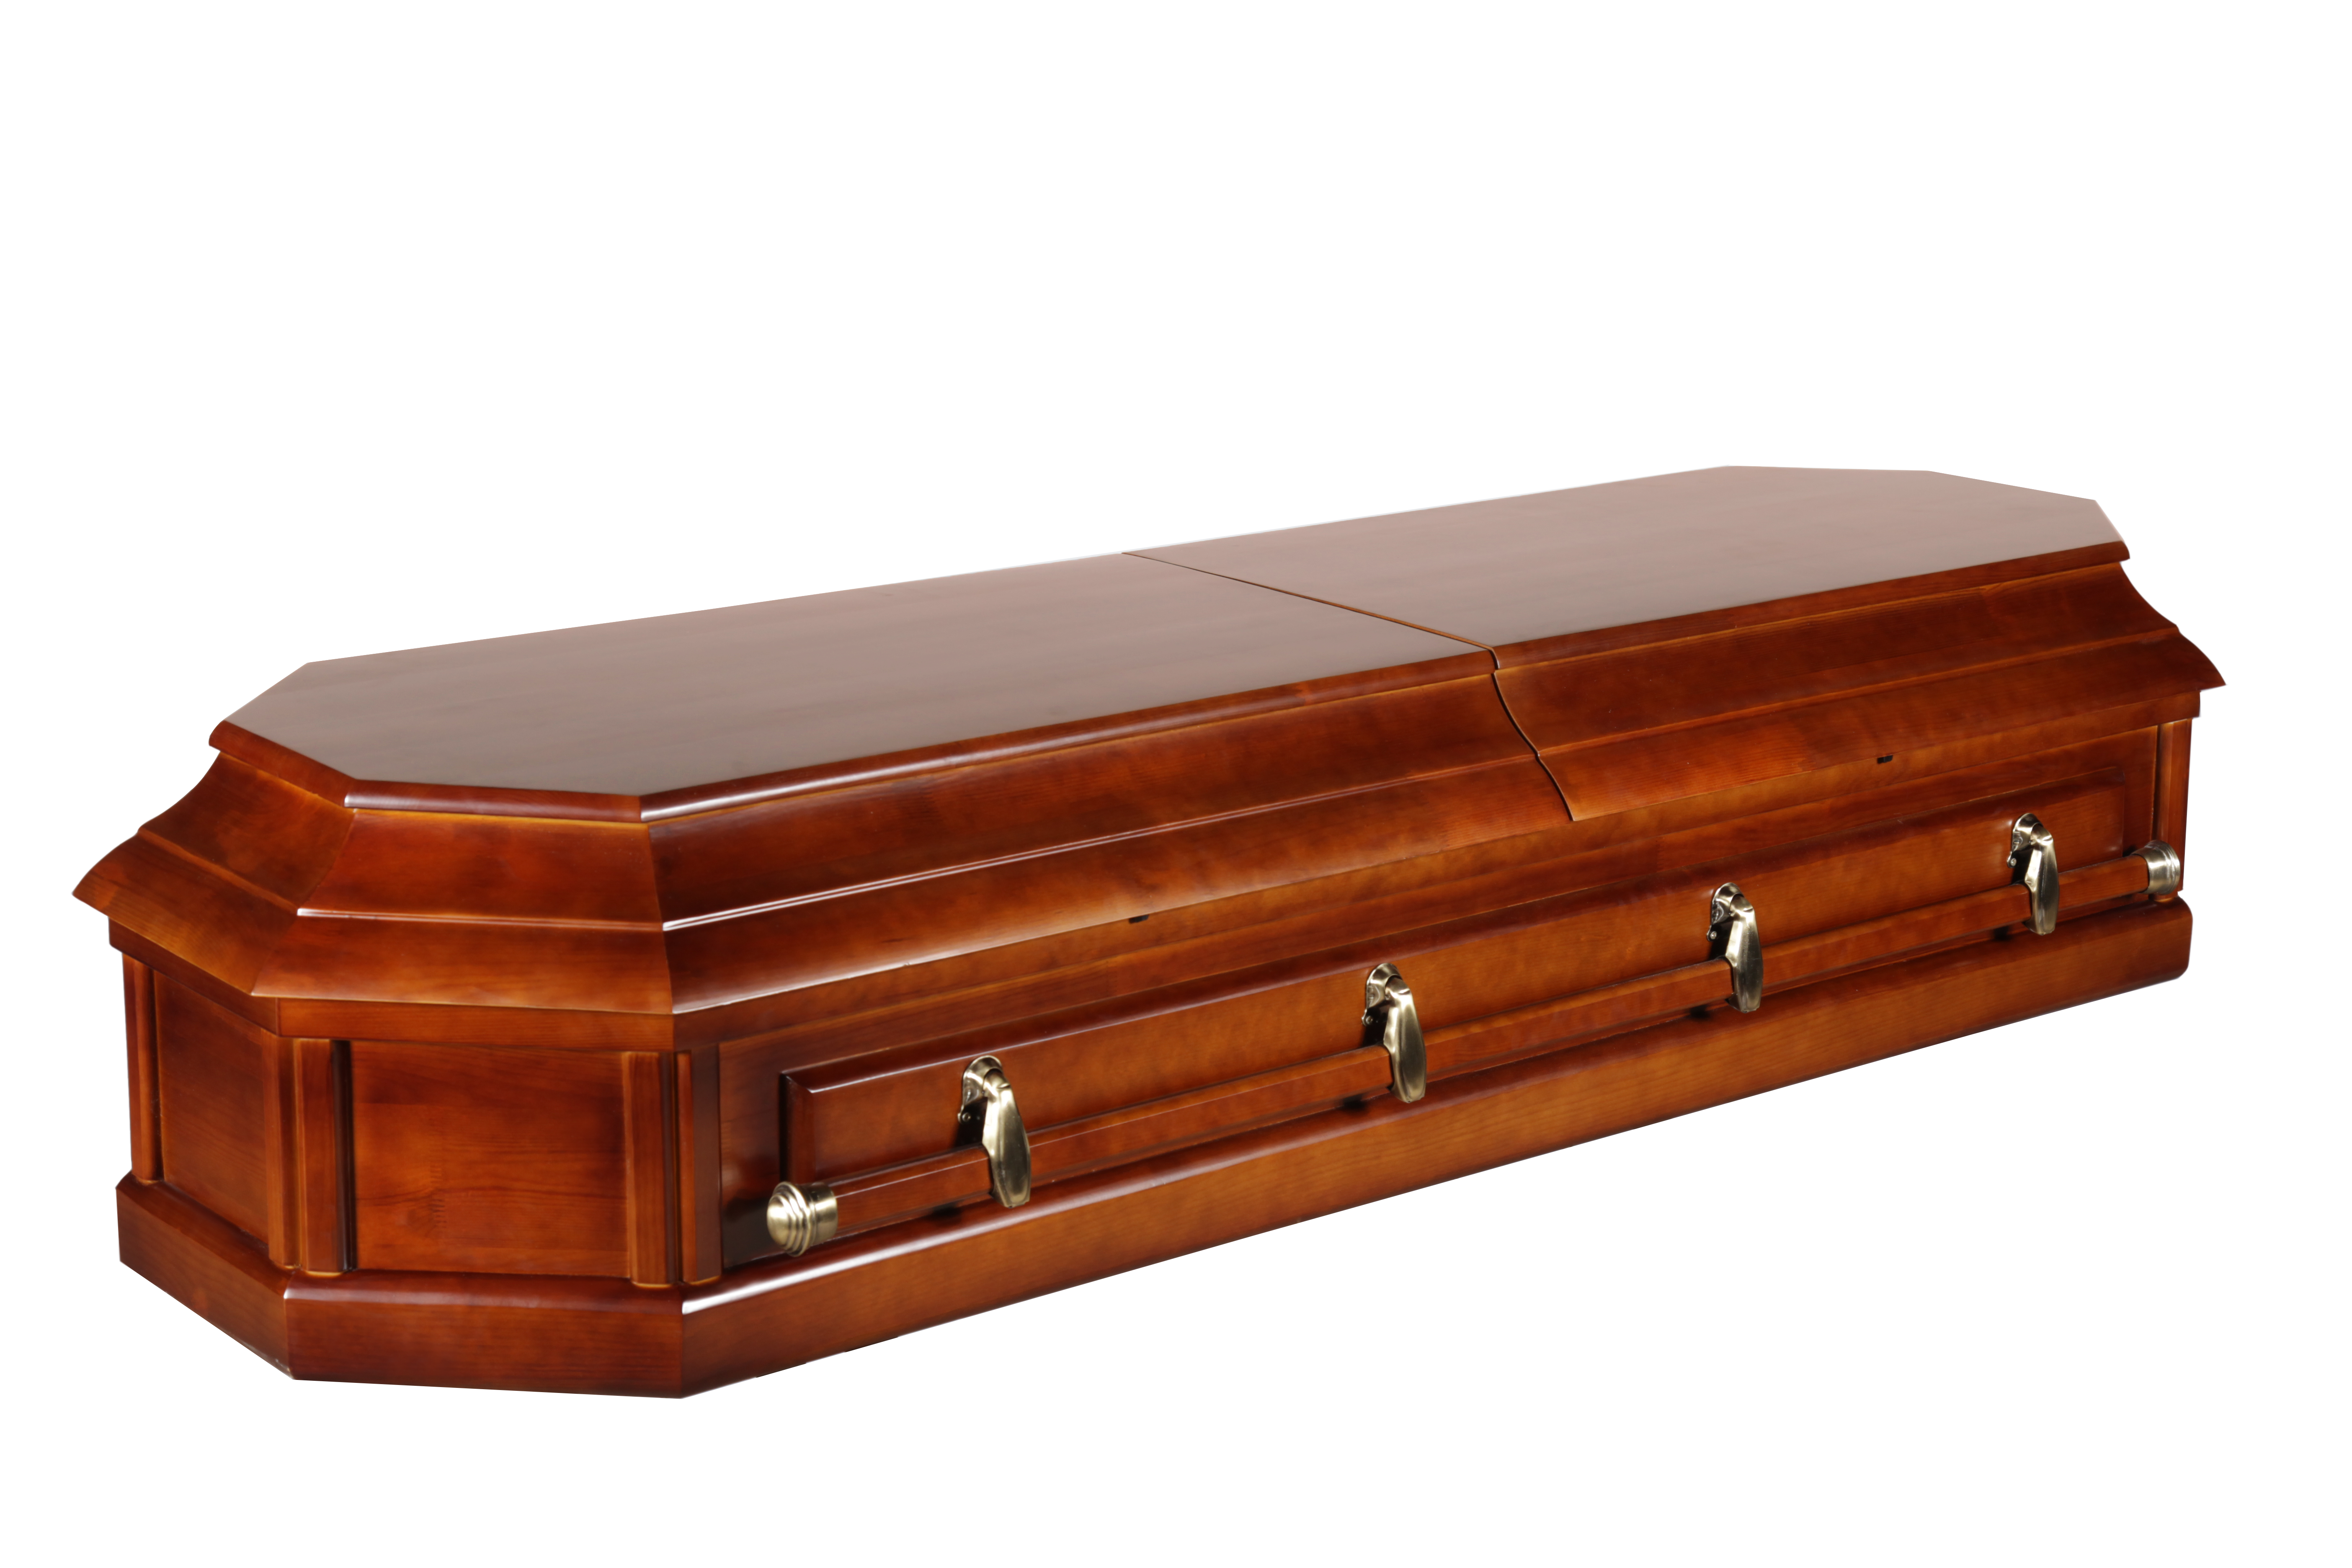 Download PNG image - Wooden Coffin Transparent Background 